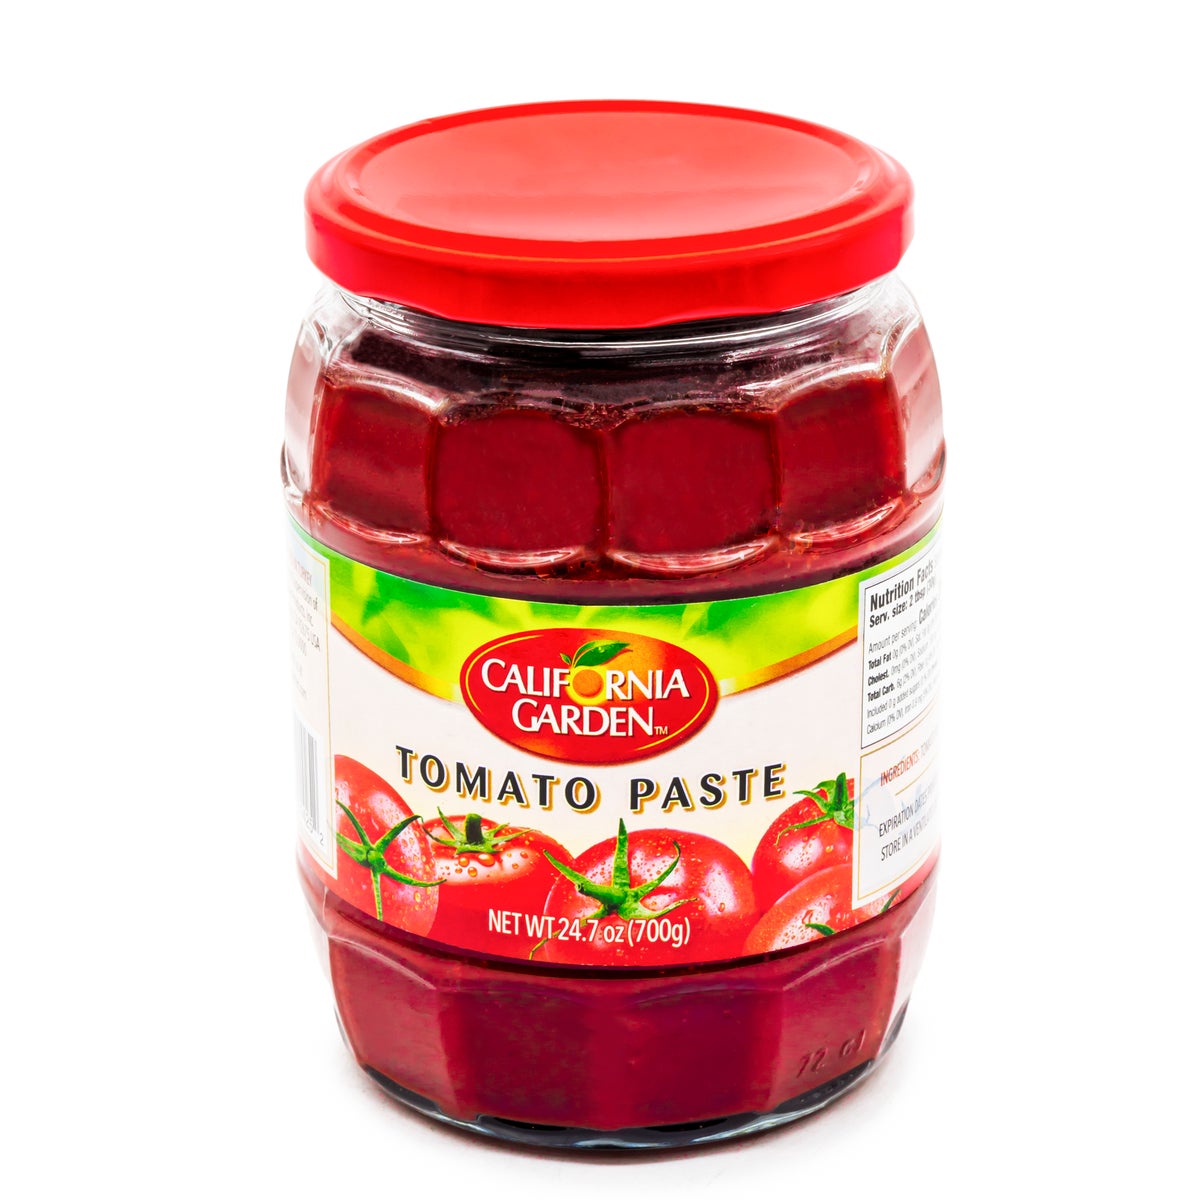 Tomato Paste Jar "California Garden" 700g  x 12